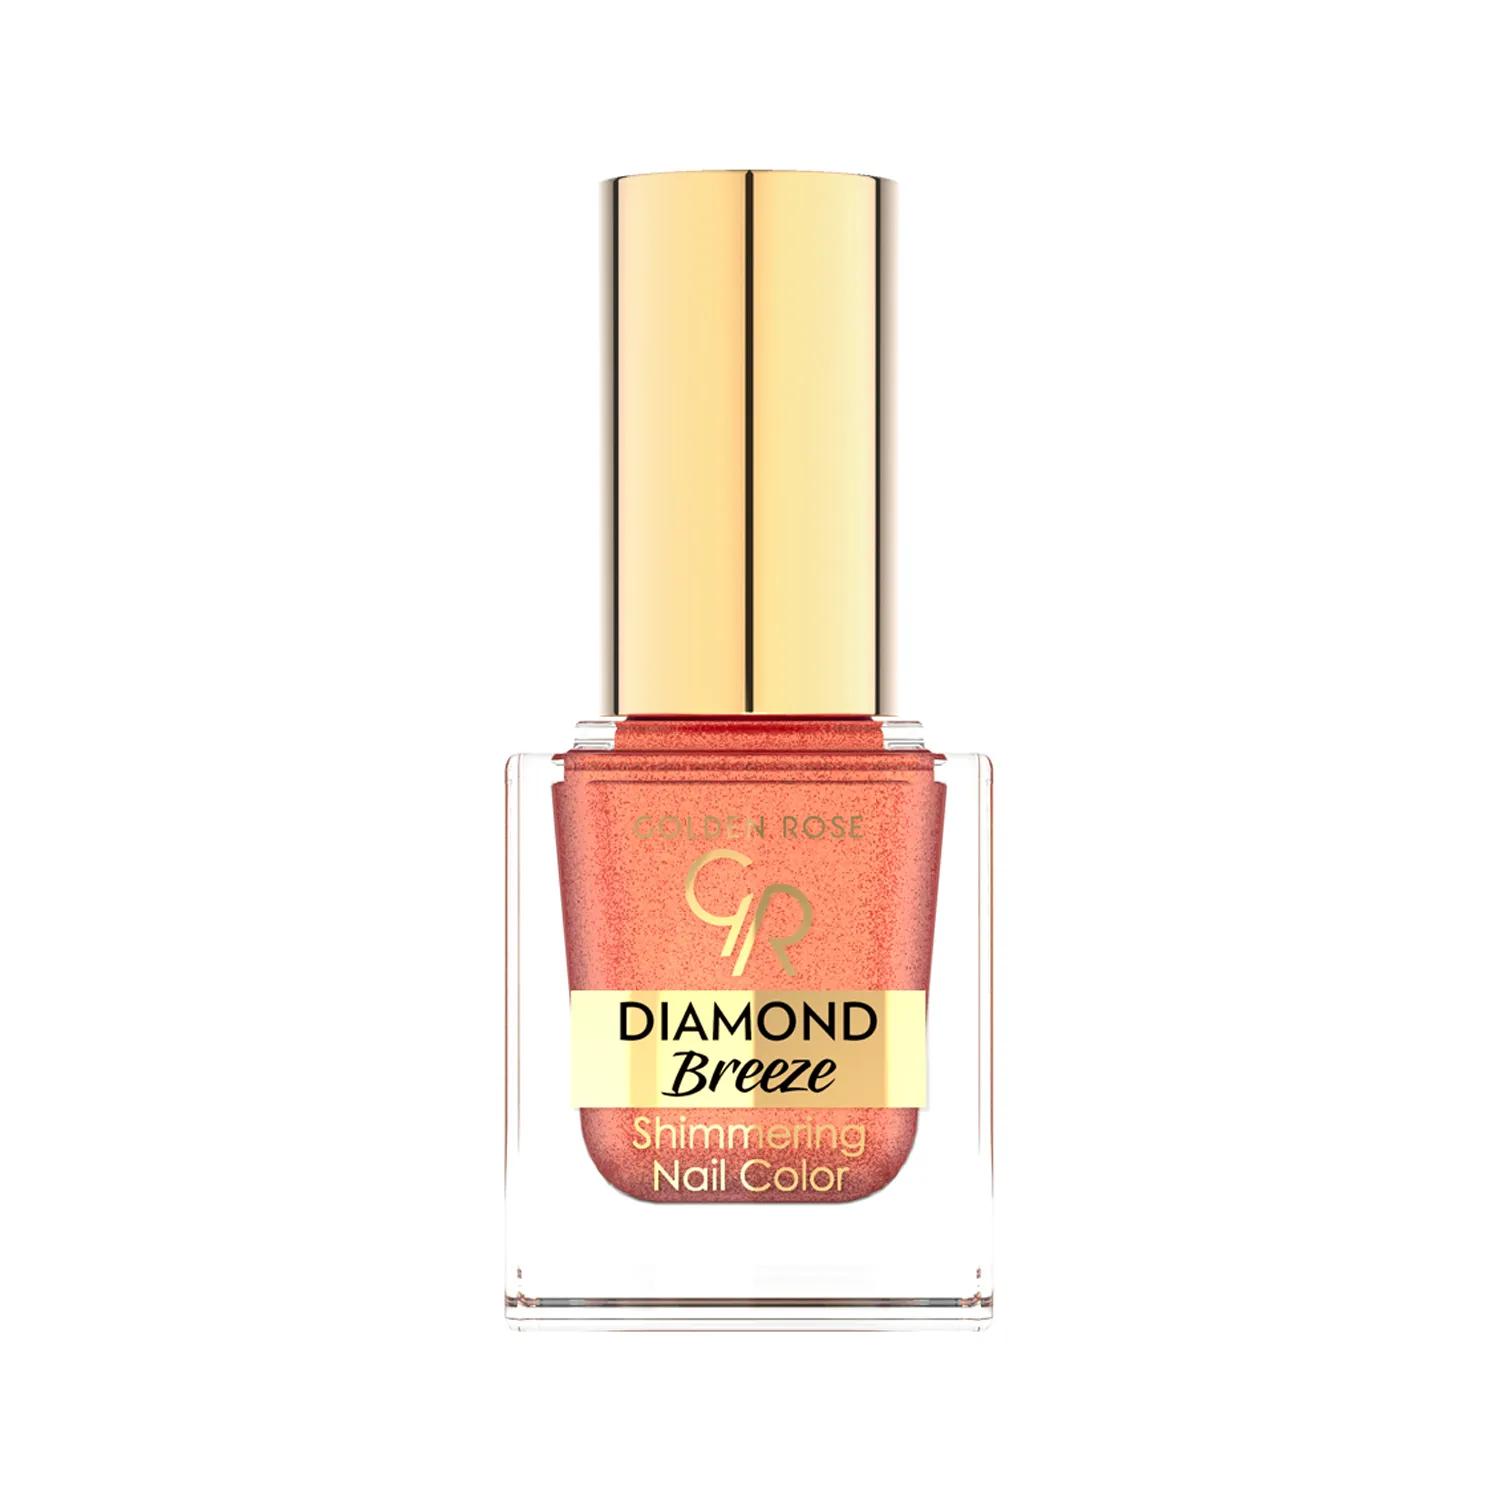 Golden Rose Diamond Breeze Shimmering Nail Color - 03 Russet Sparkle